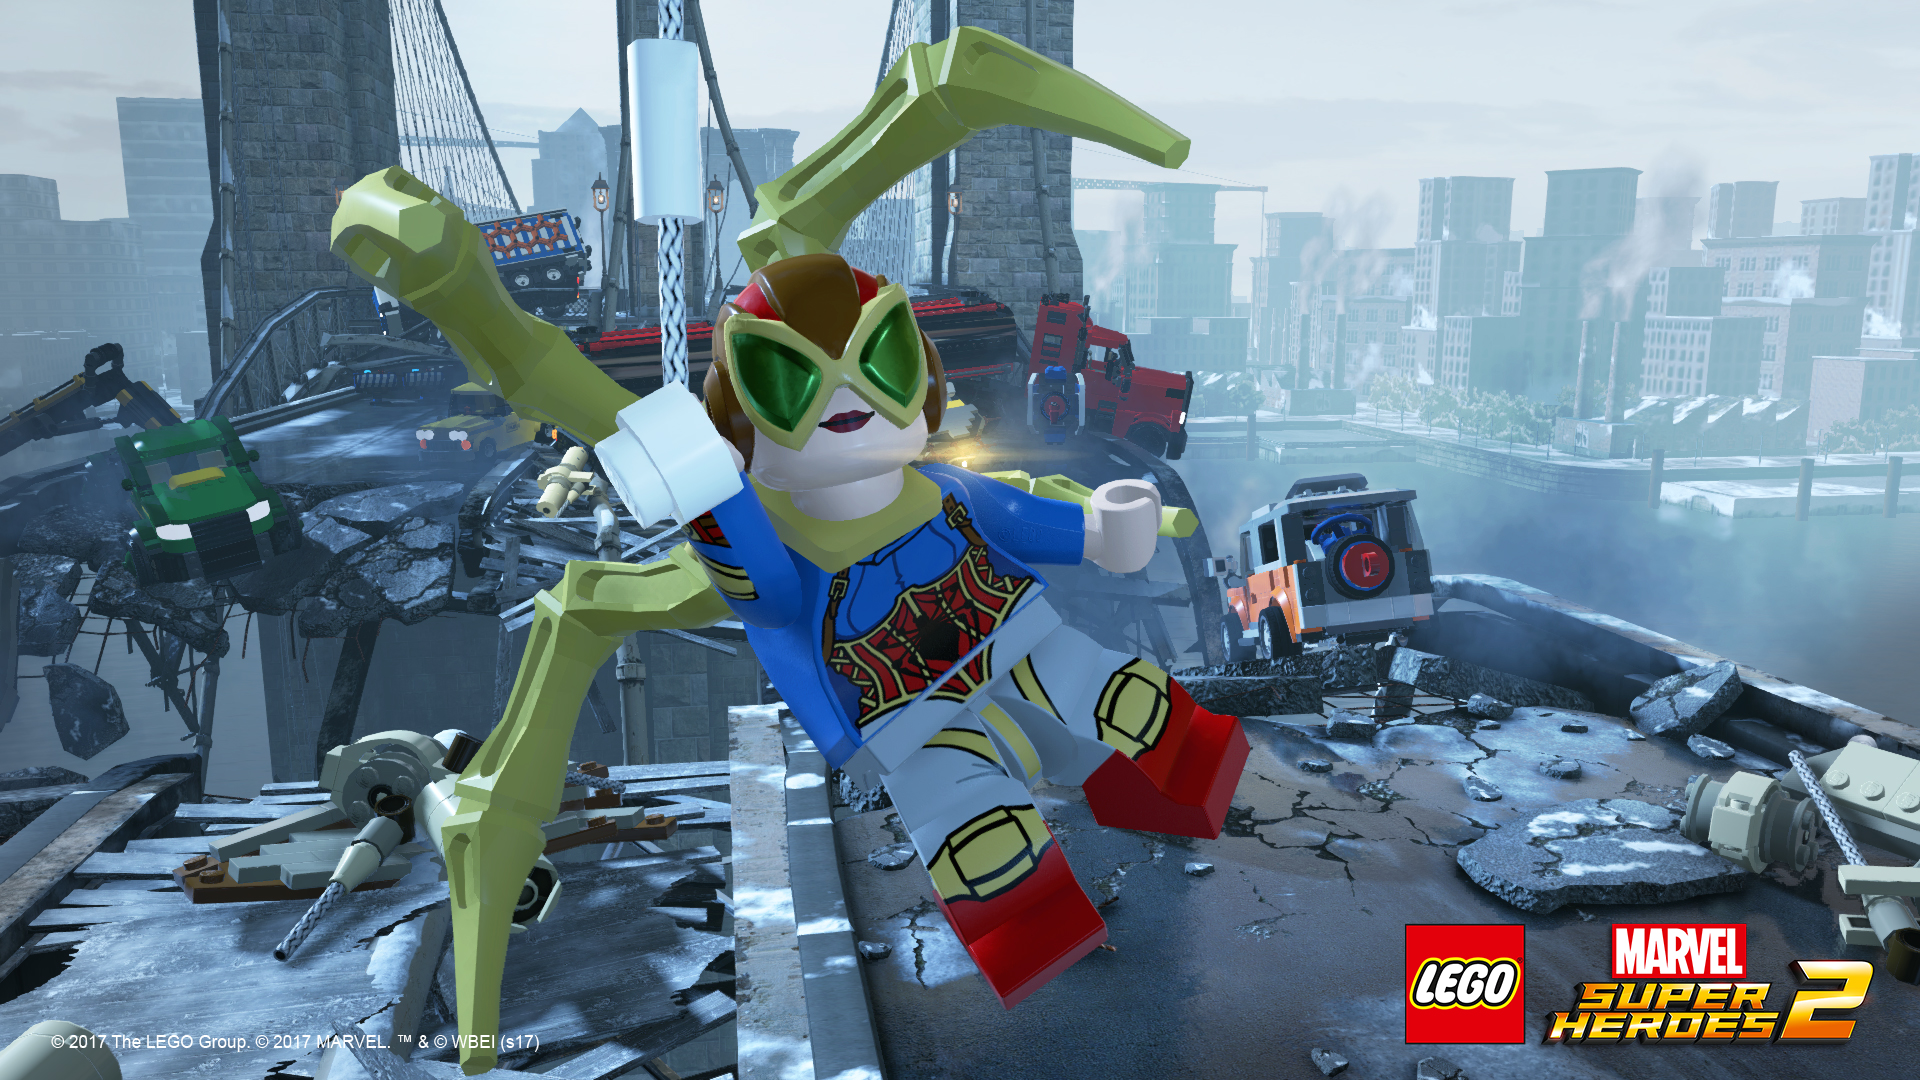 LEGO_Marvel_Super_Heroes_2_-_Lady_Spider_1507794996